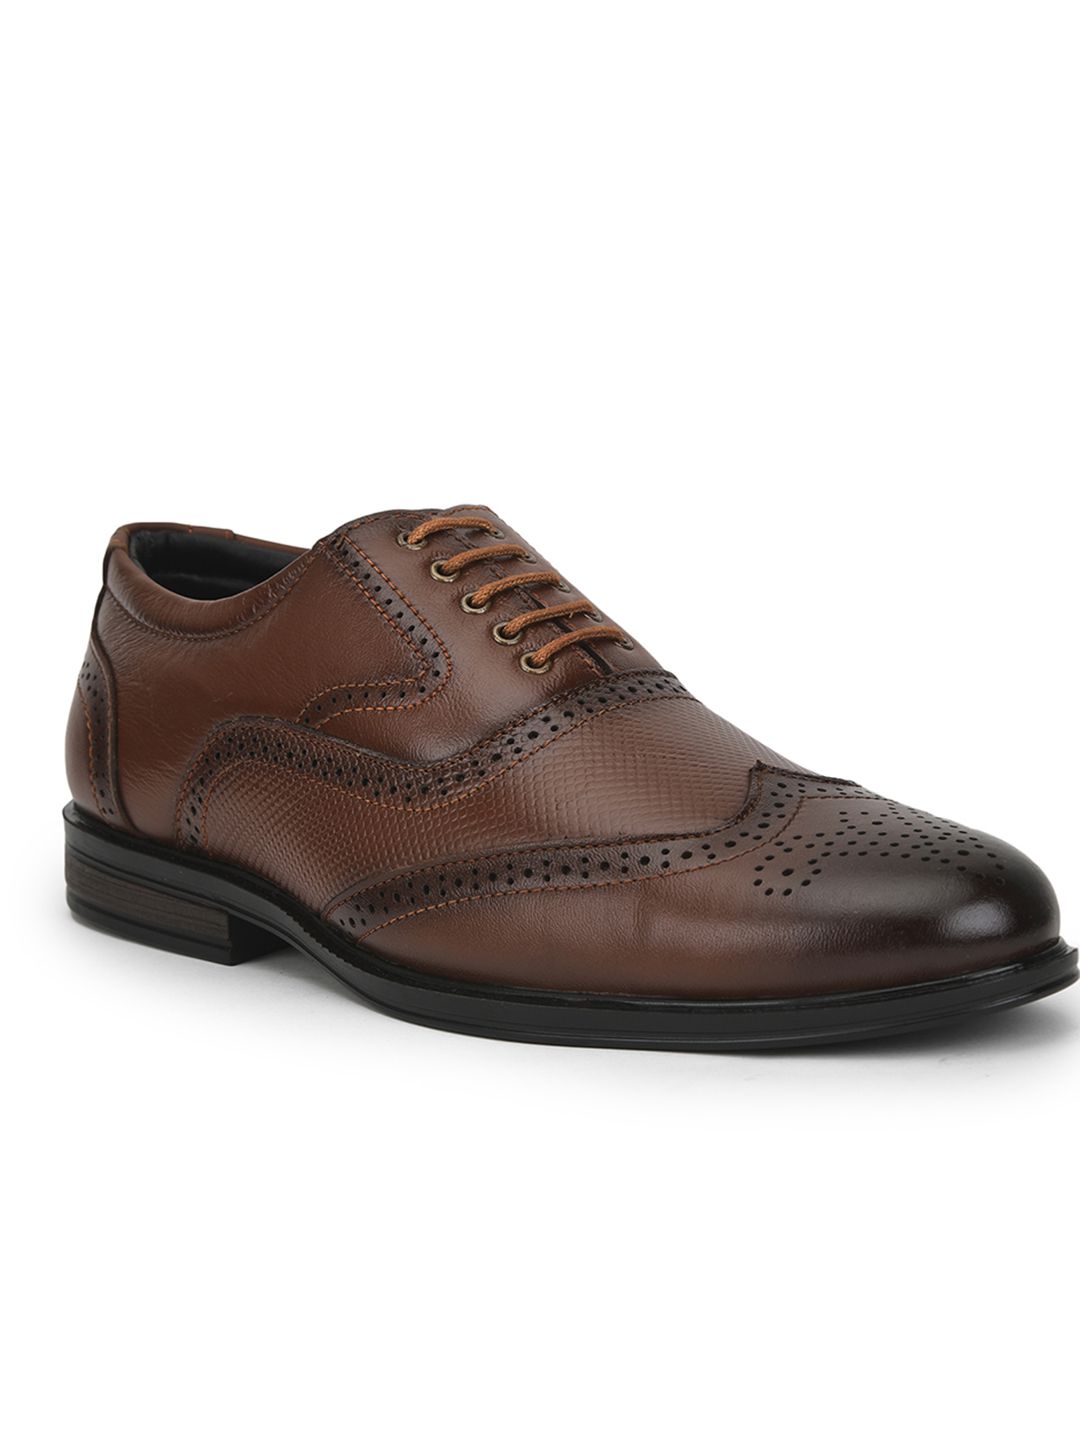     			Liberty - Brown Men's Brogue Formal Shoes